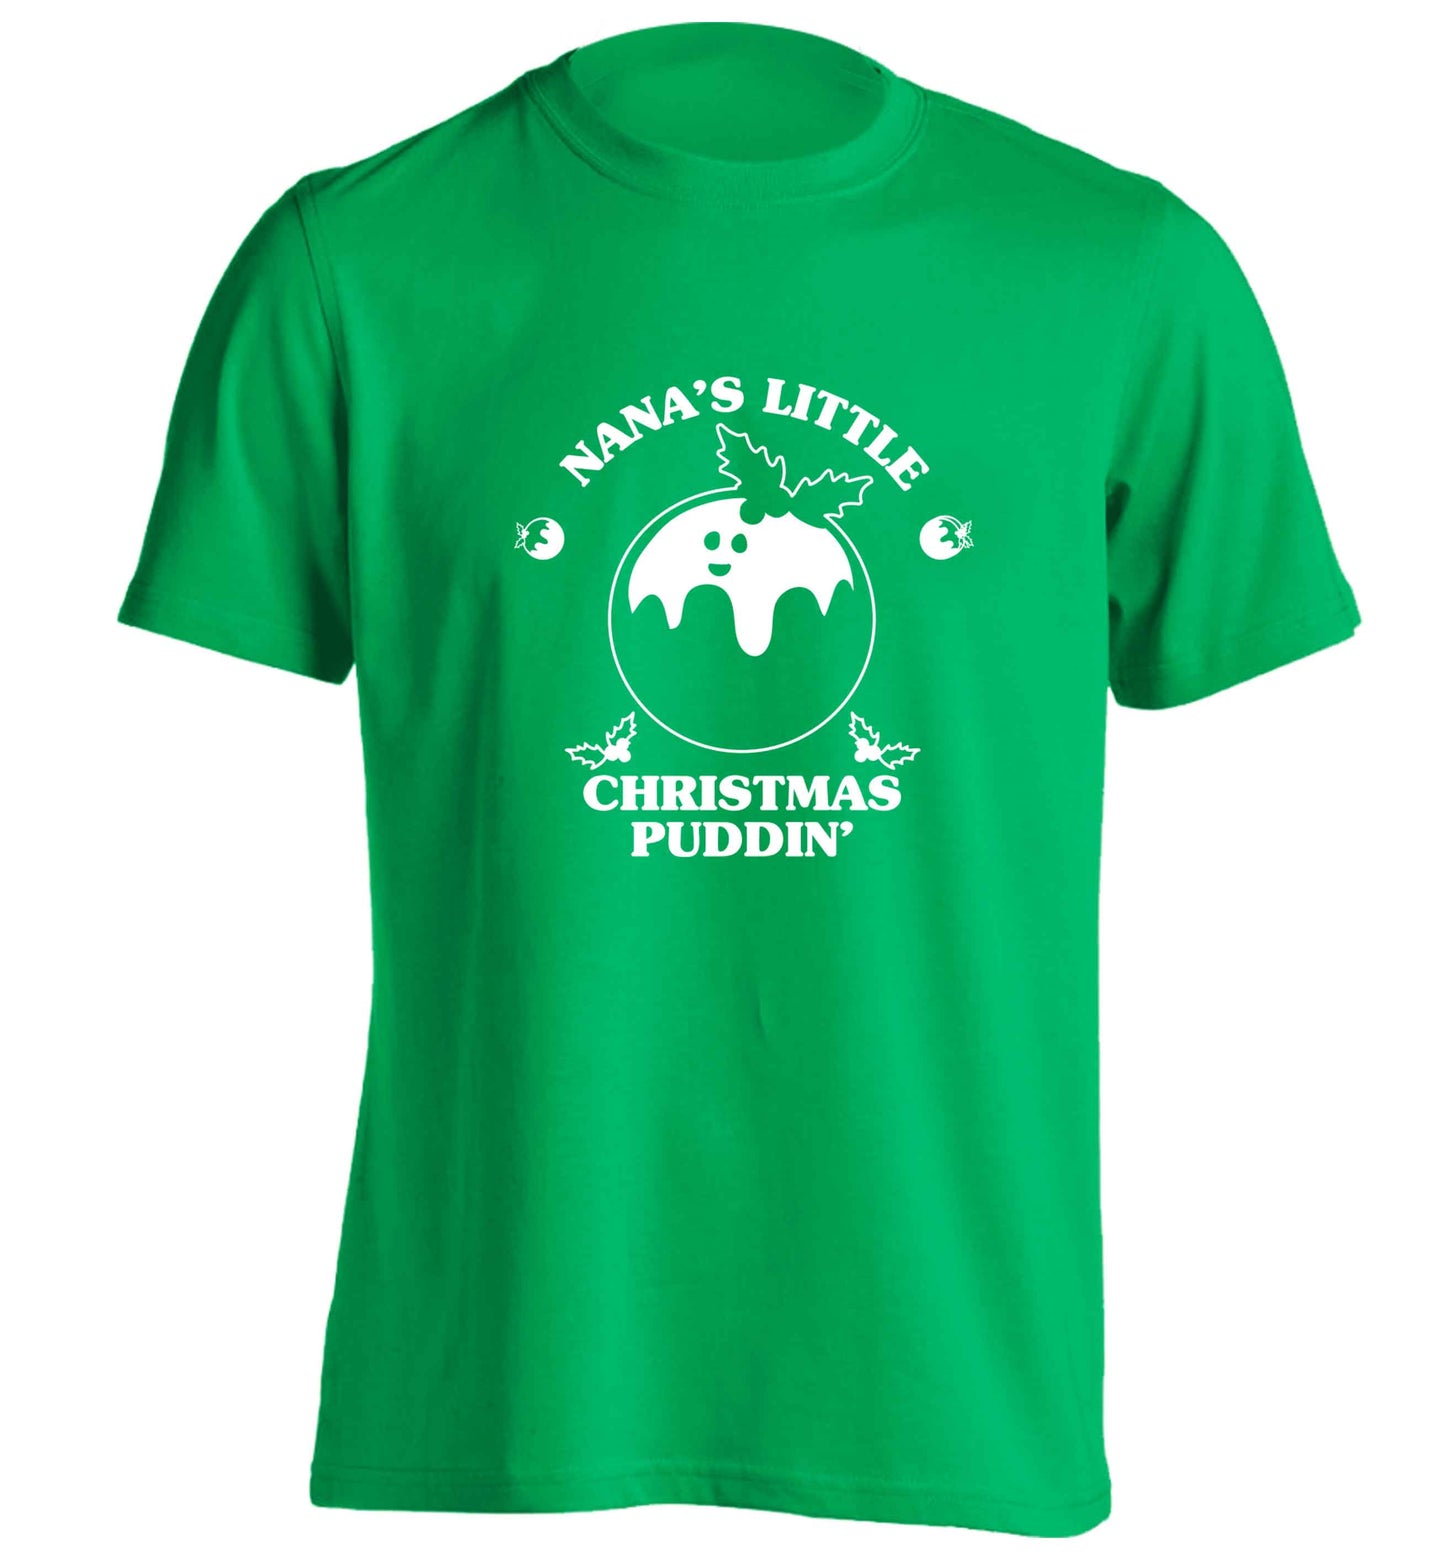 Nana's little Christmas puddin' adults unisex green Tshirt 2XL